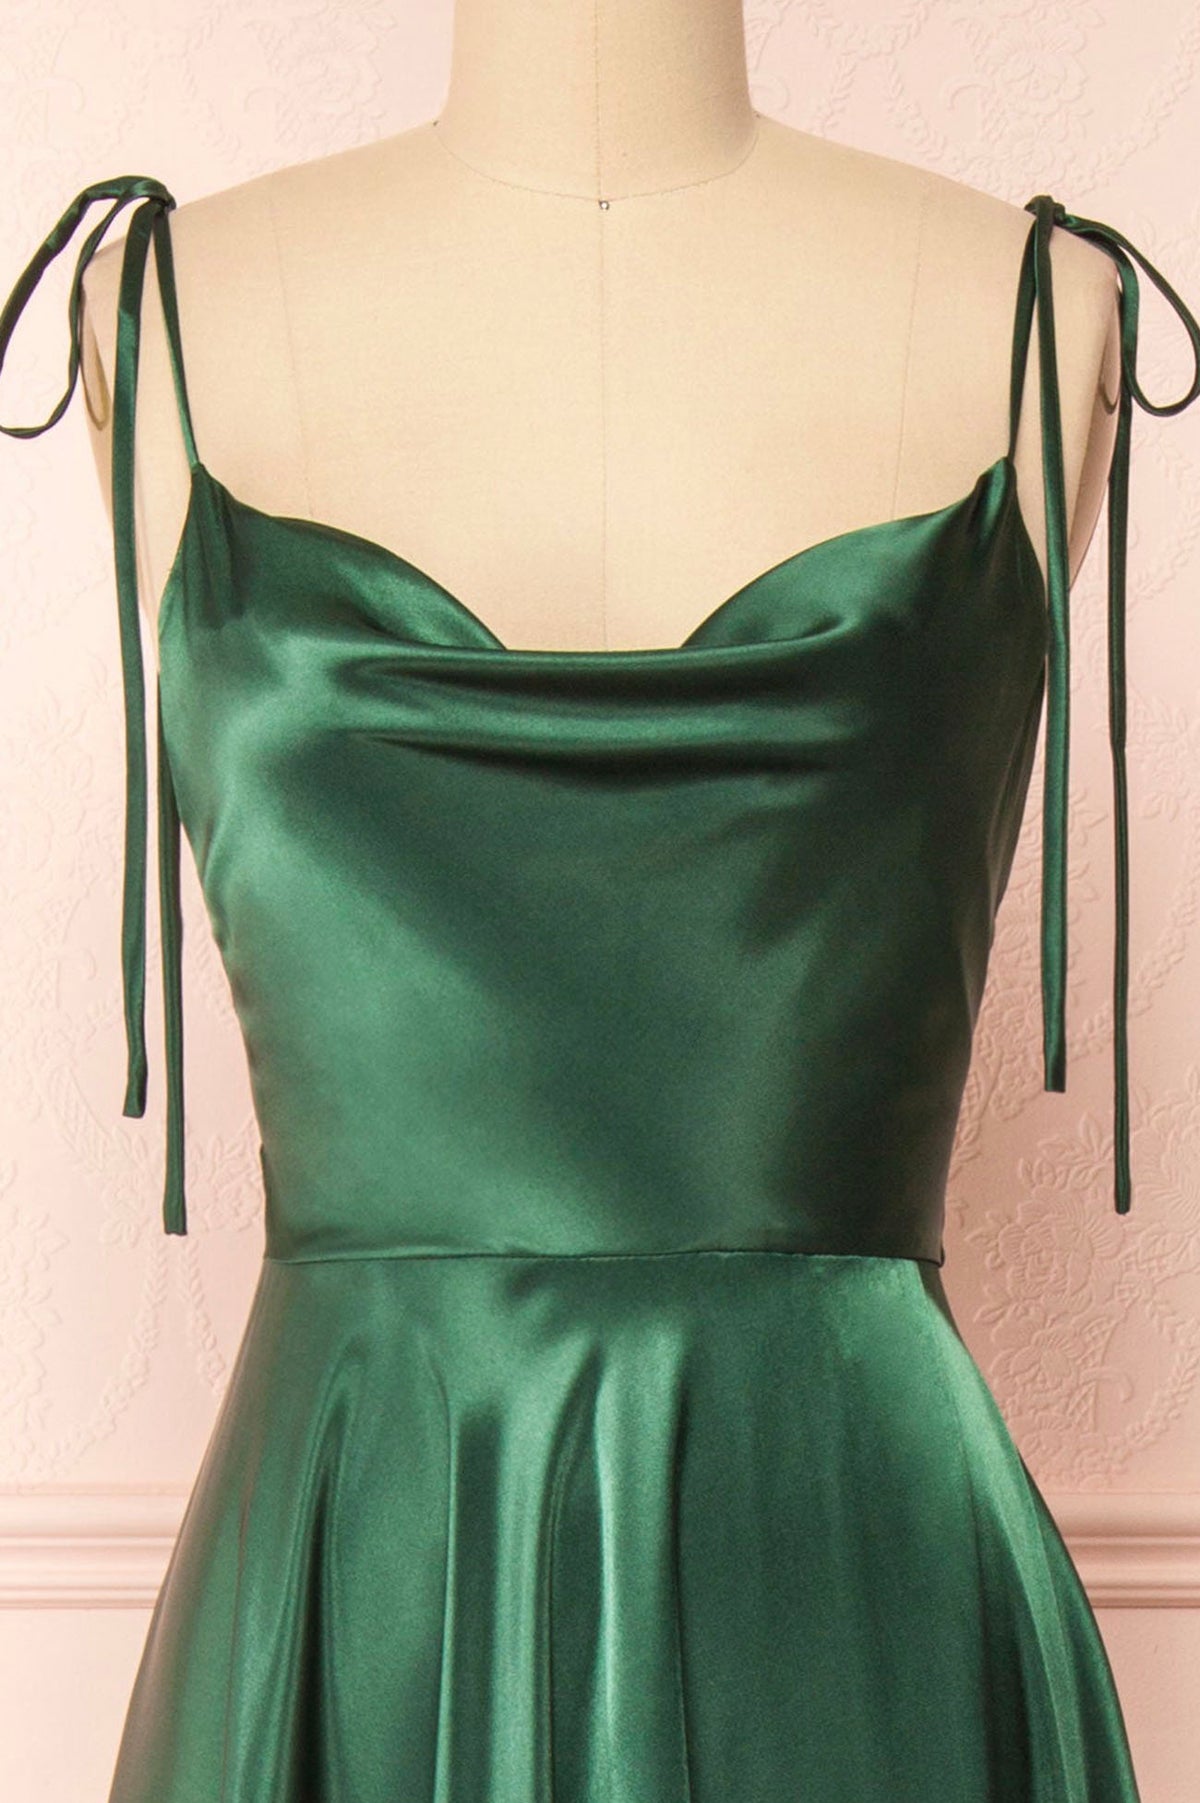 Simple Satin Long A-Line Prom Dress, Spaghetti Straps Evening Dress